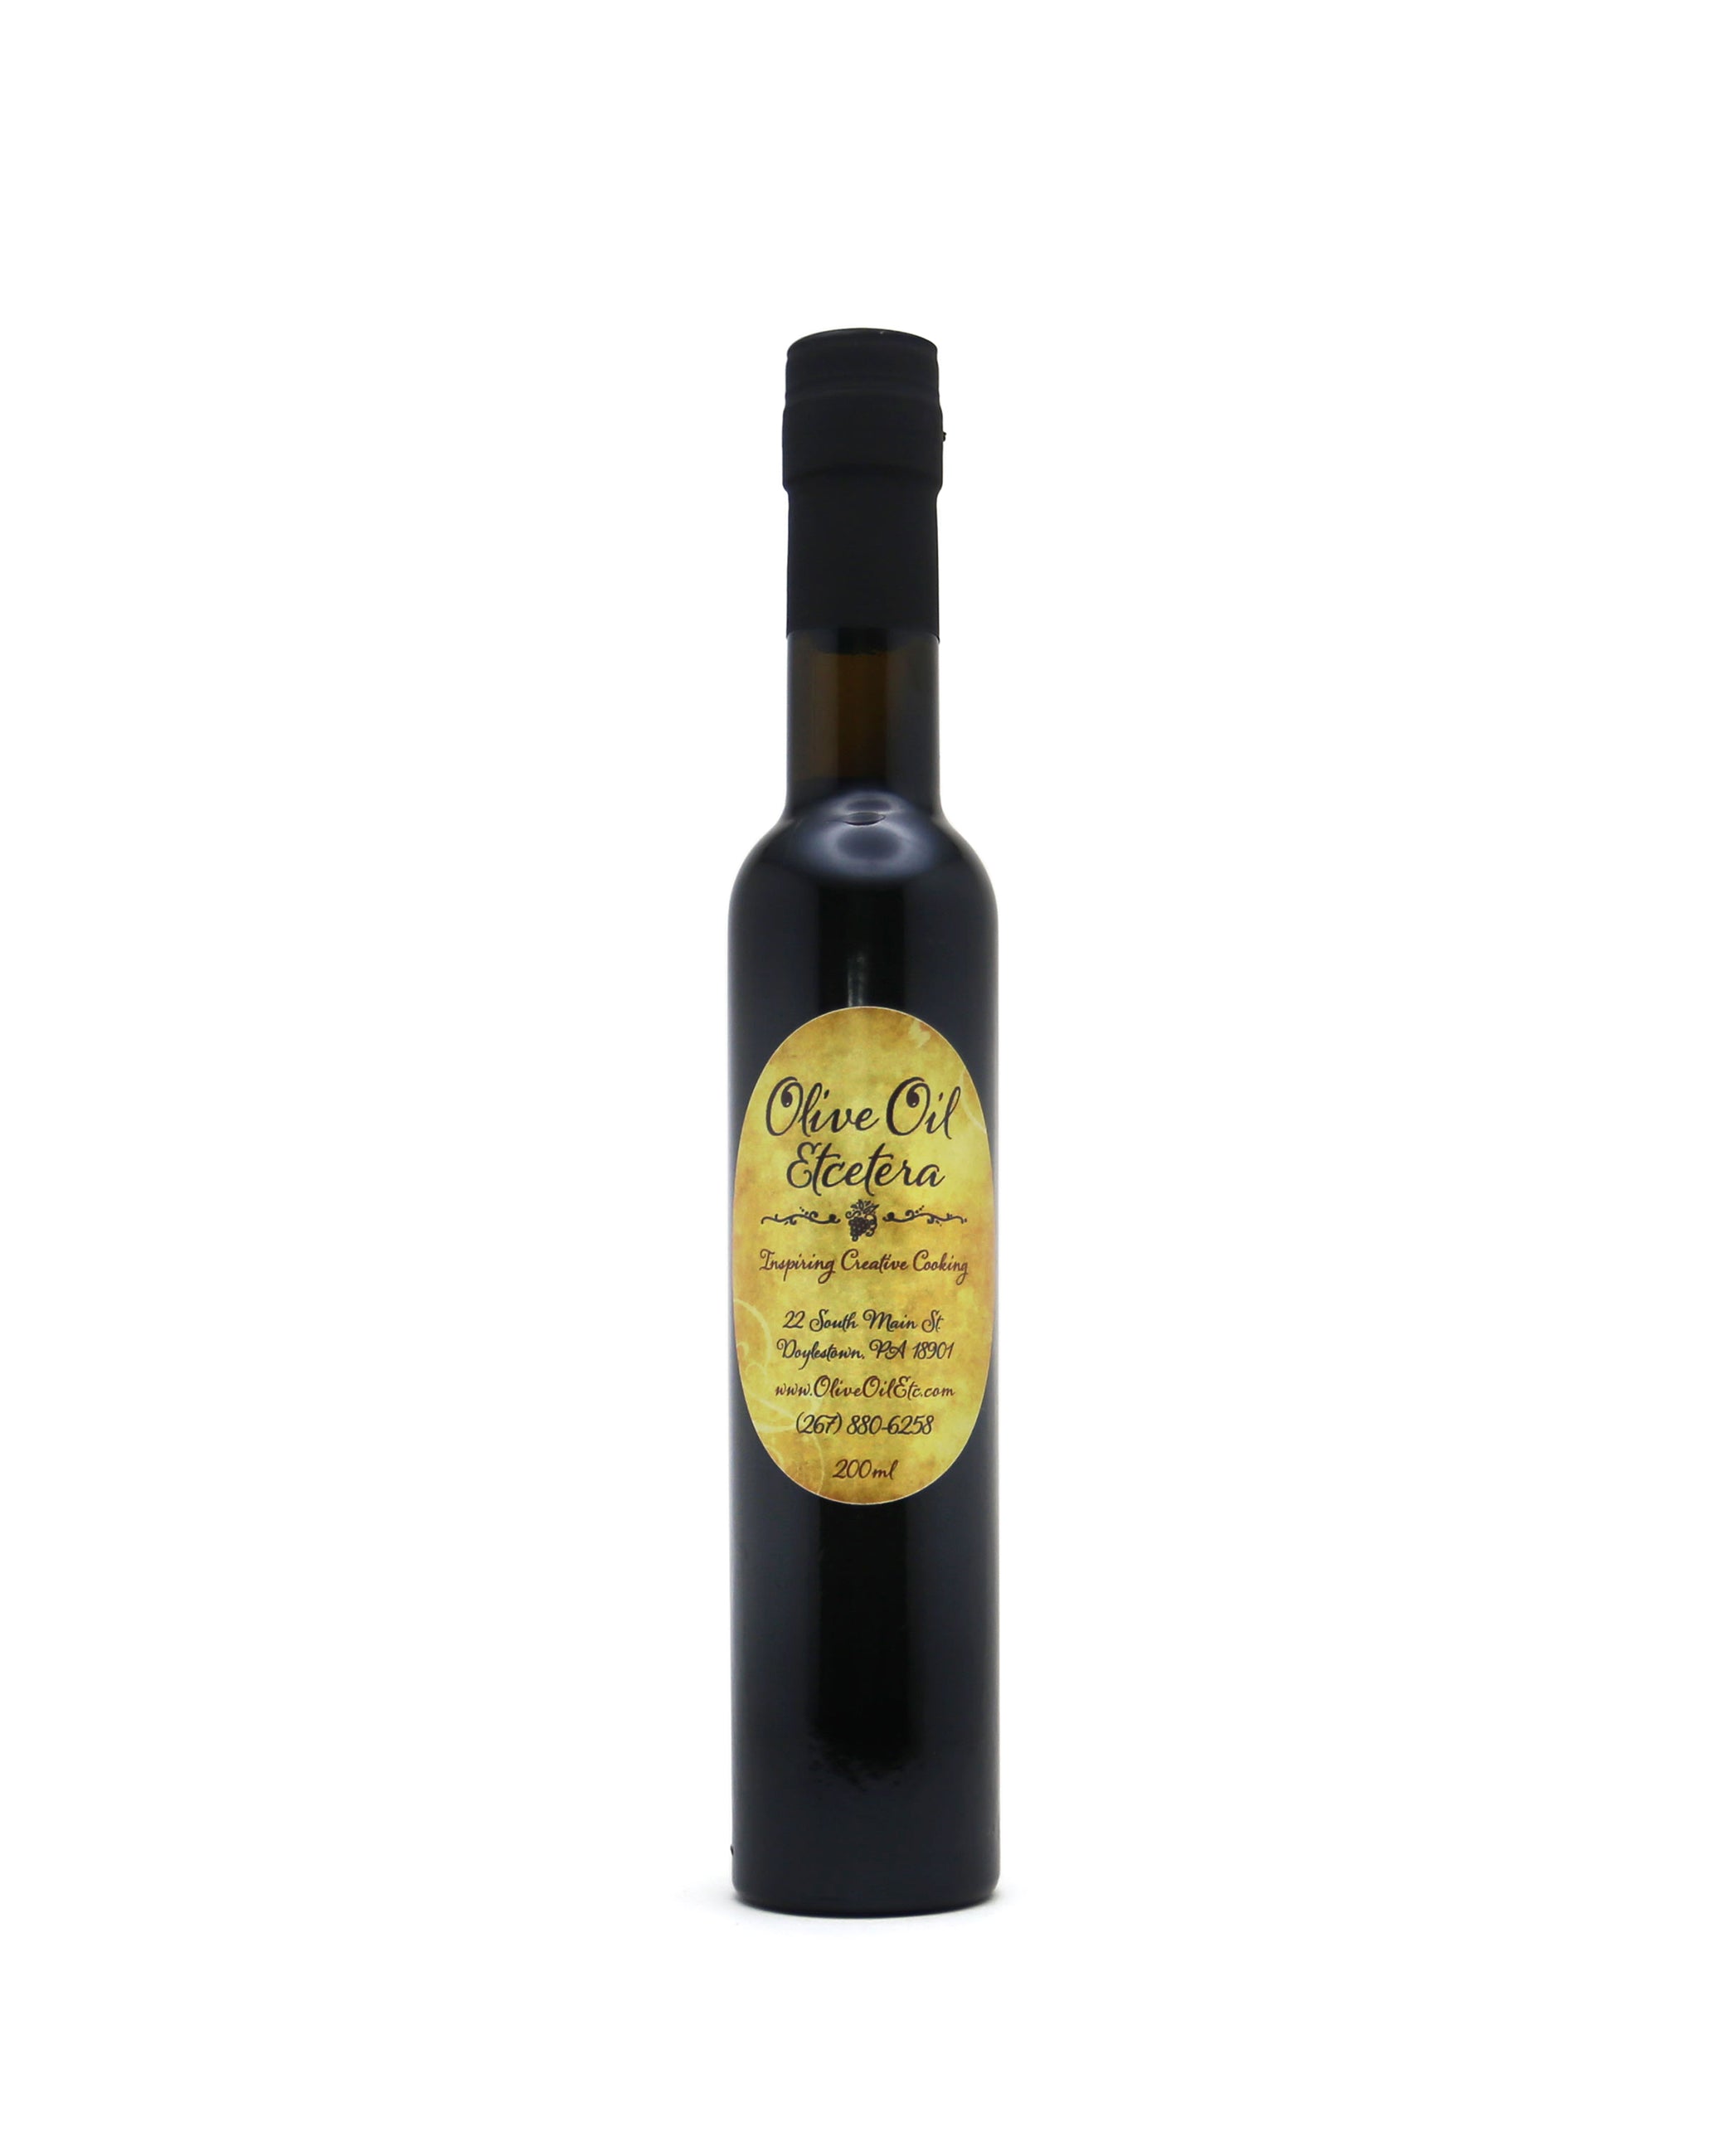 Peach Balsamic Vinegar - Olive Oil Etcetera - Bucks county's gourmet olive oil and vinegar shop